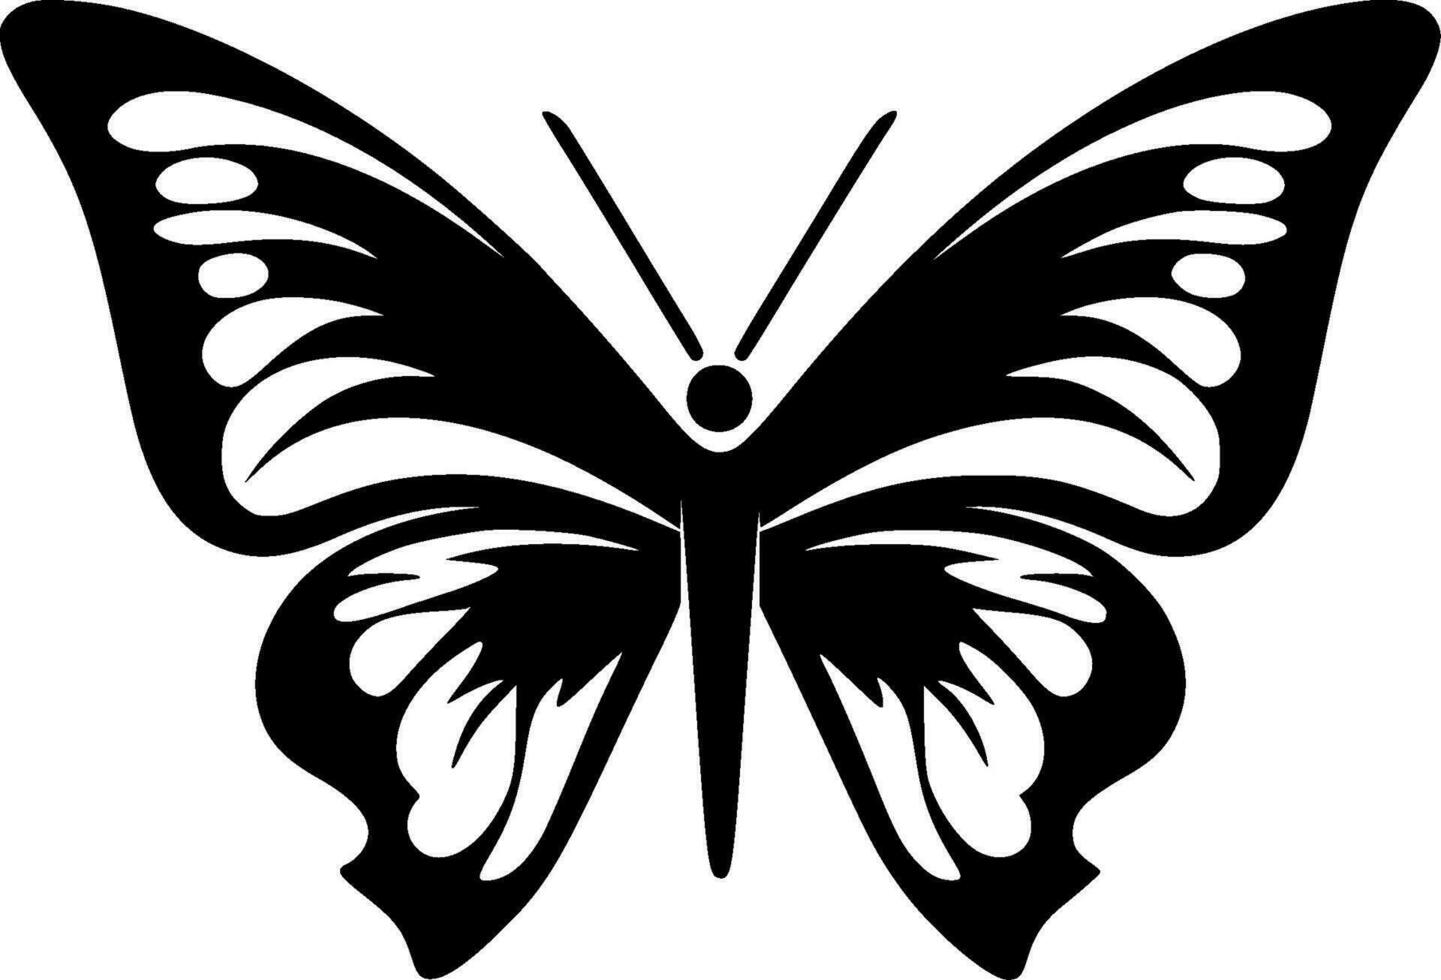 Butterfly - Minimalist and Flat Logo - Vector illustration